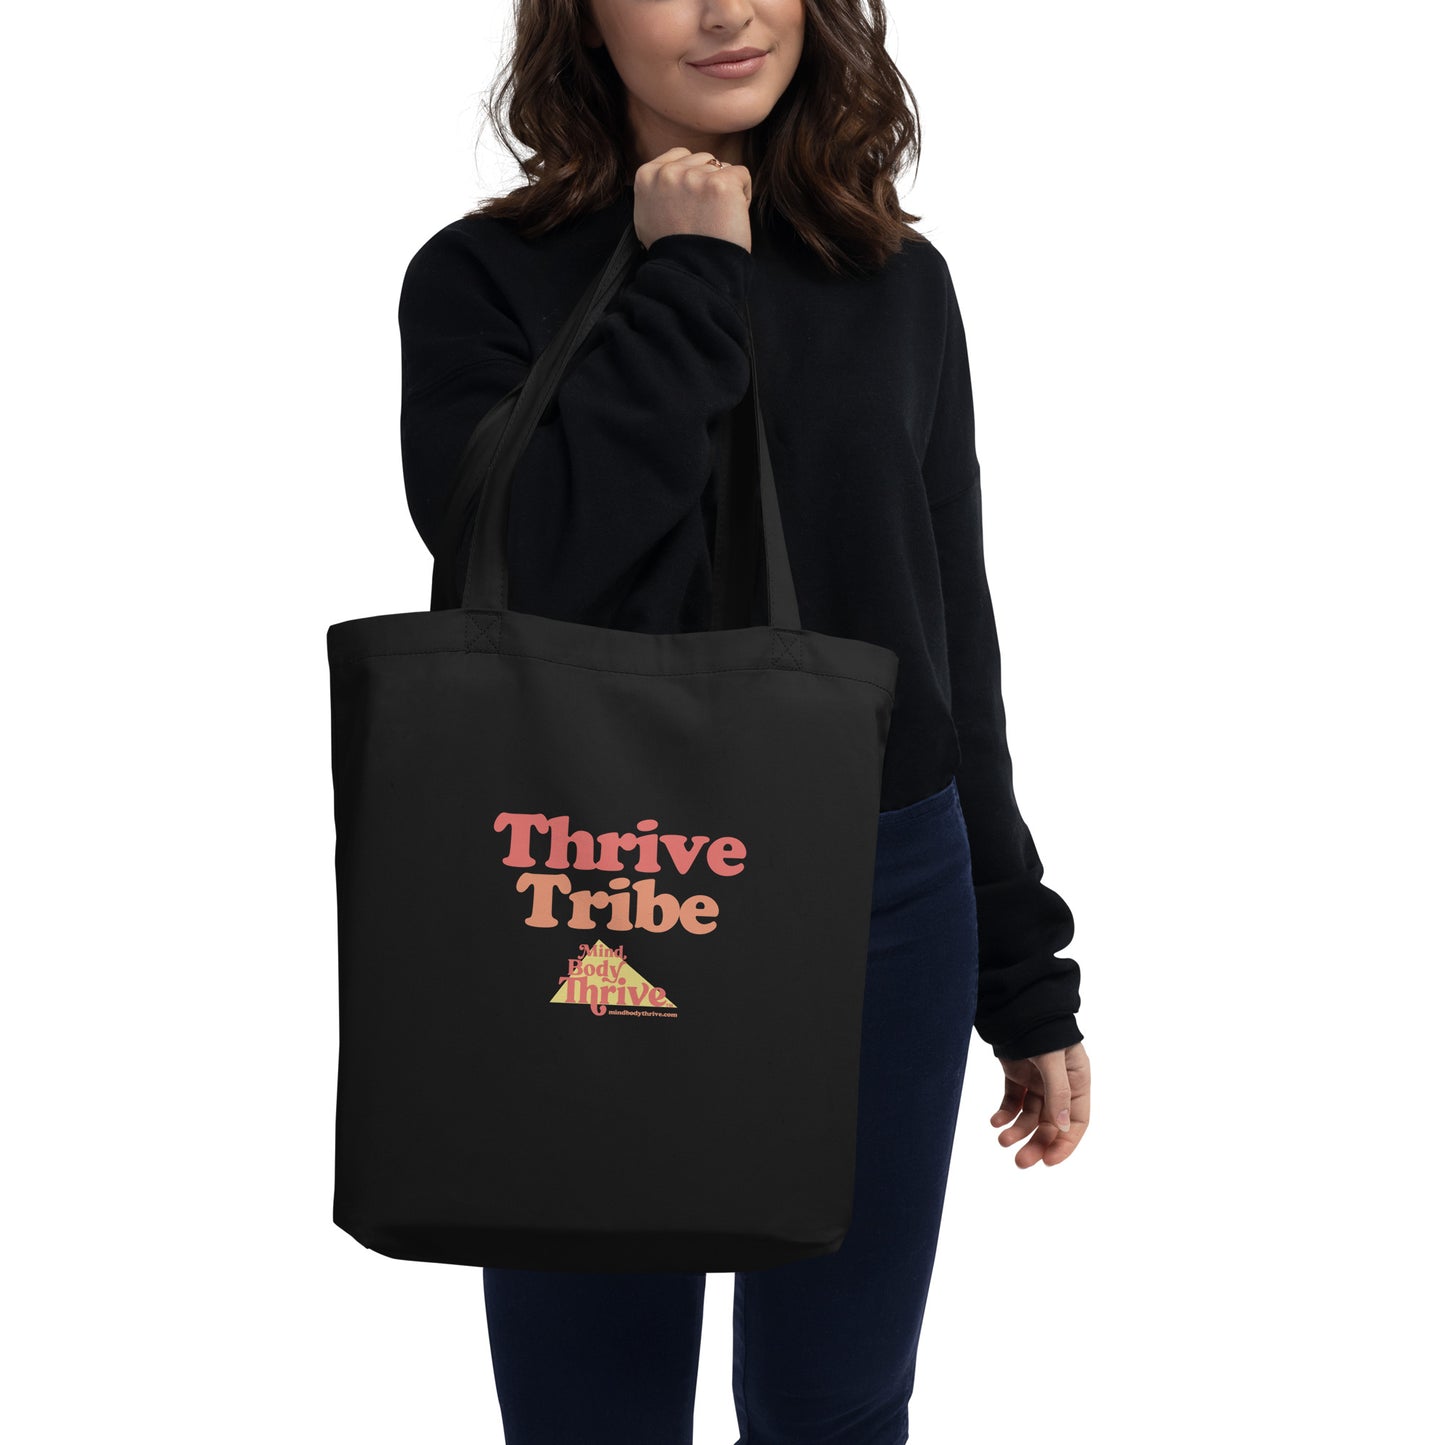 "Thrive Tribe" Eco Tote Bag